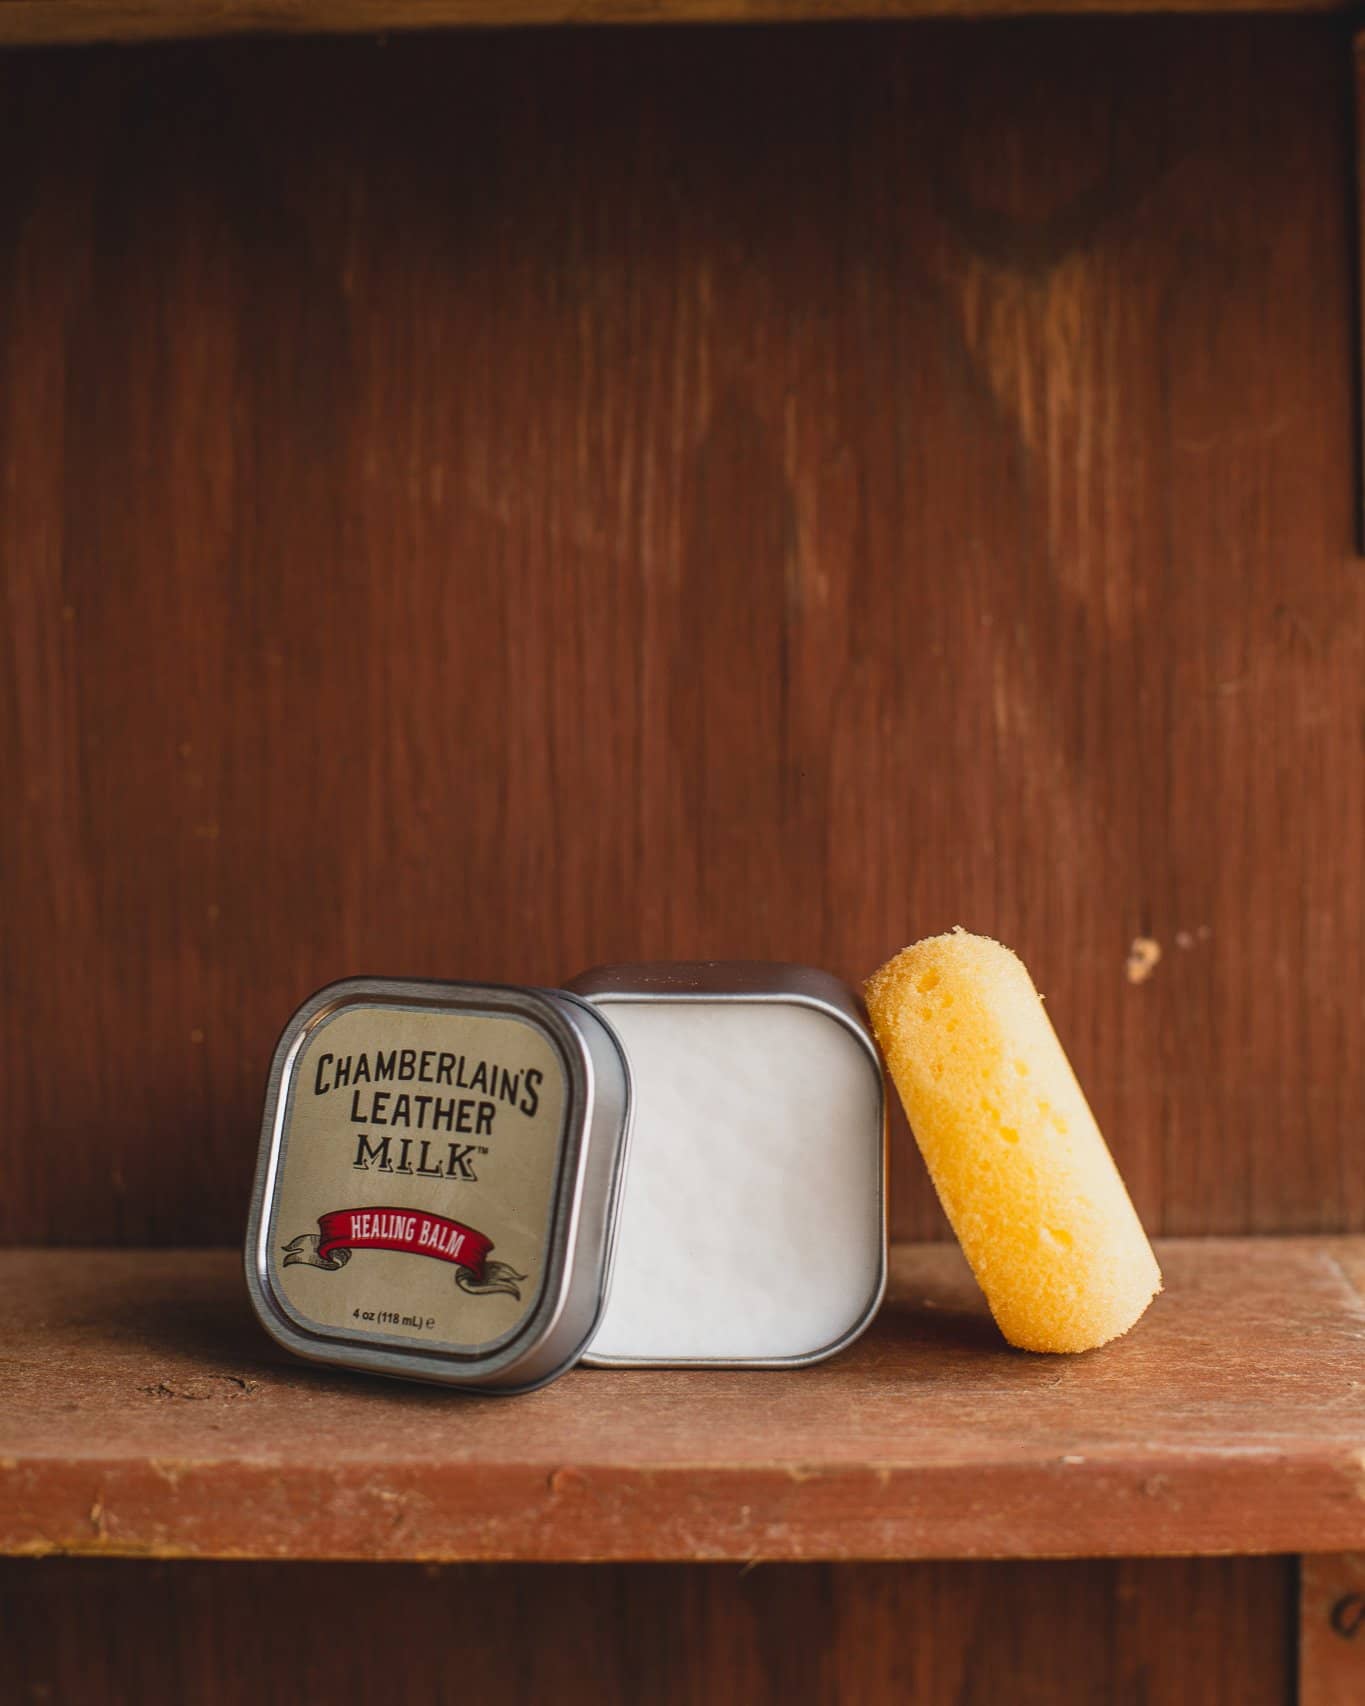 Chamberlins Leather Milk Healing balm on wooden shelf open with sponge